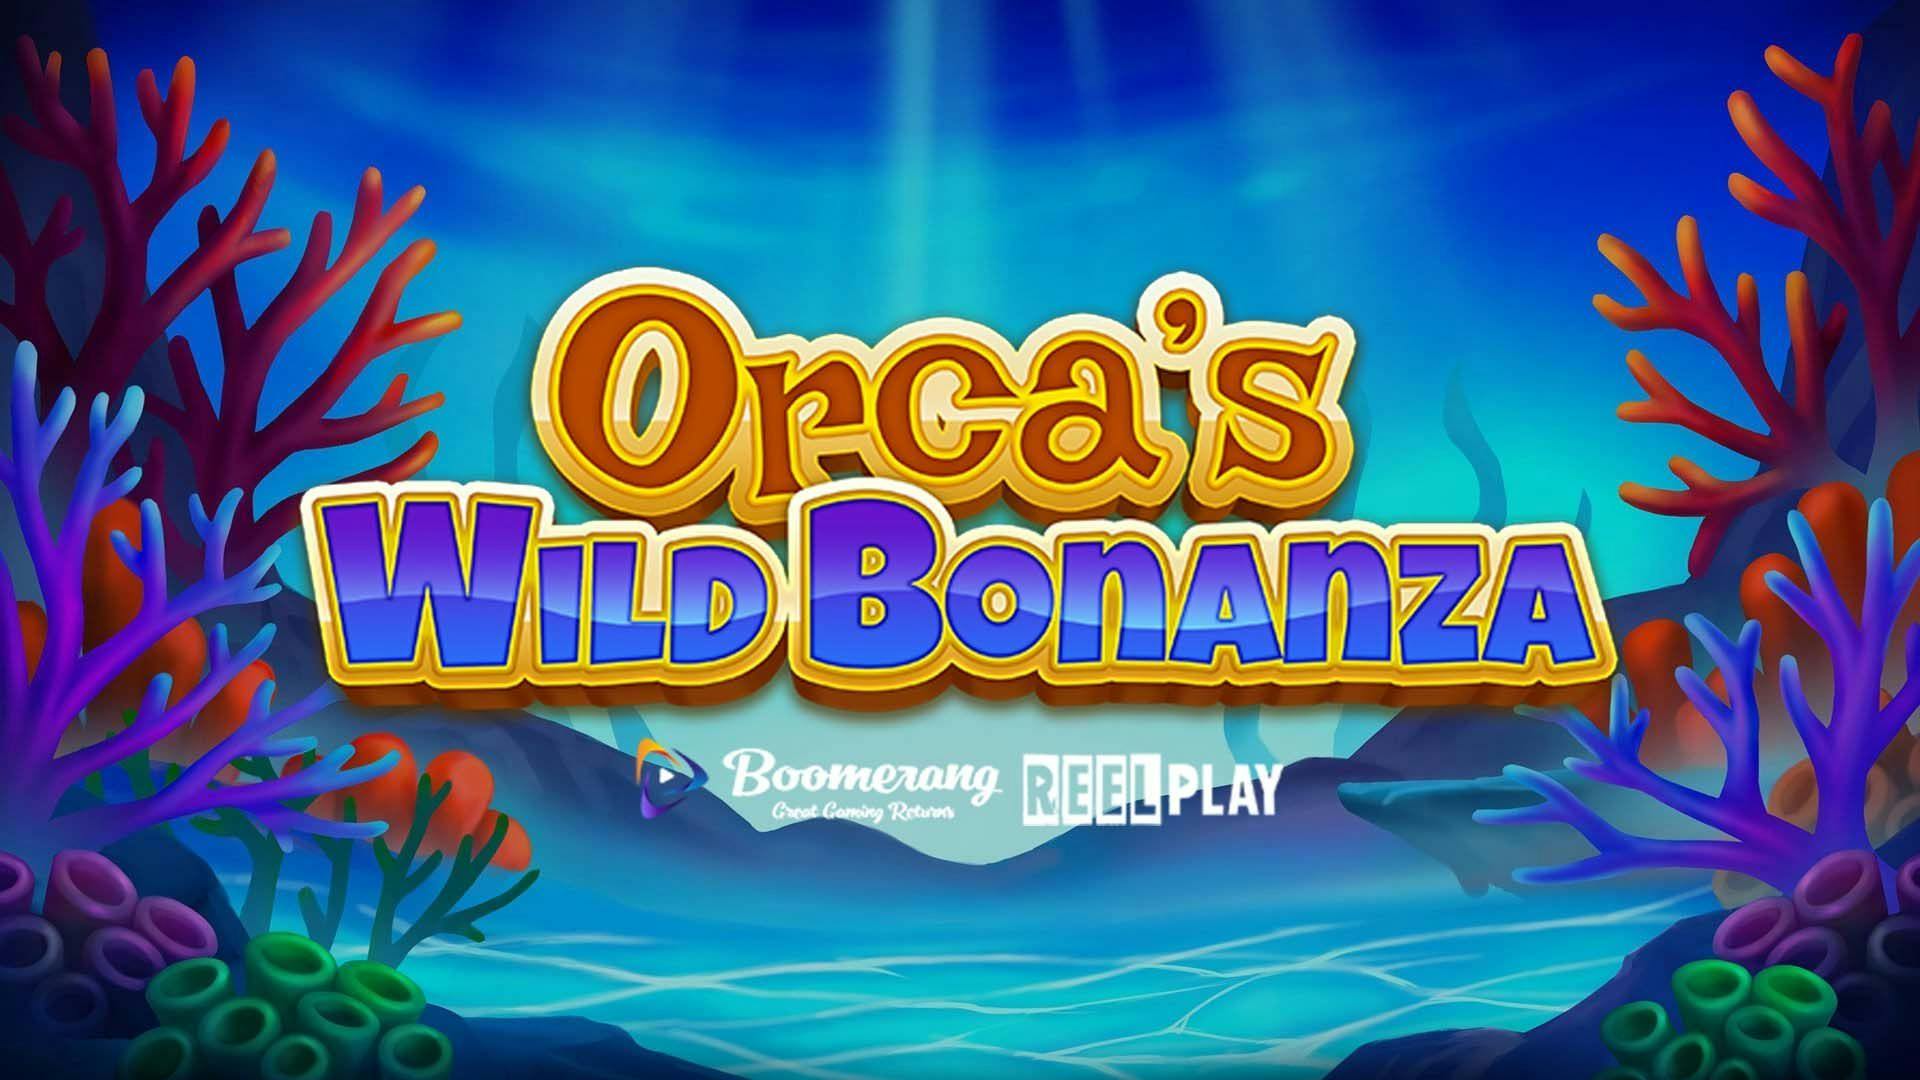 Orca's Wild Bonanza Slot Machine Online Free Game Play